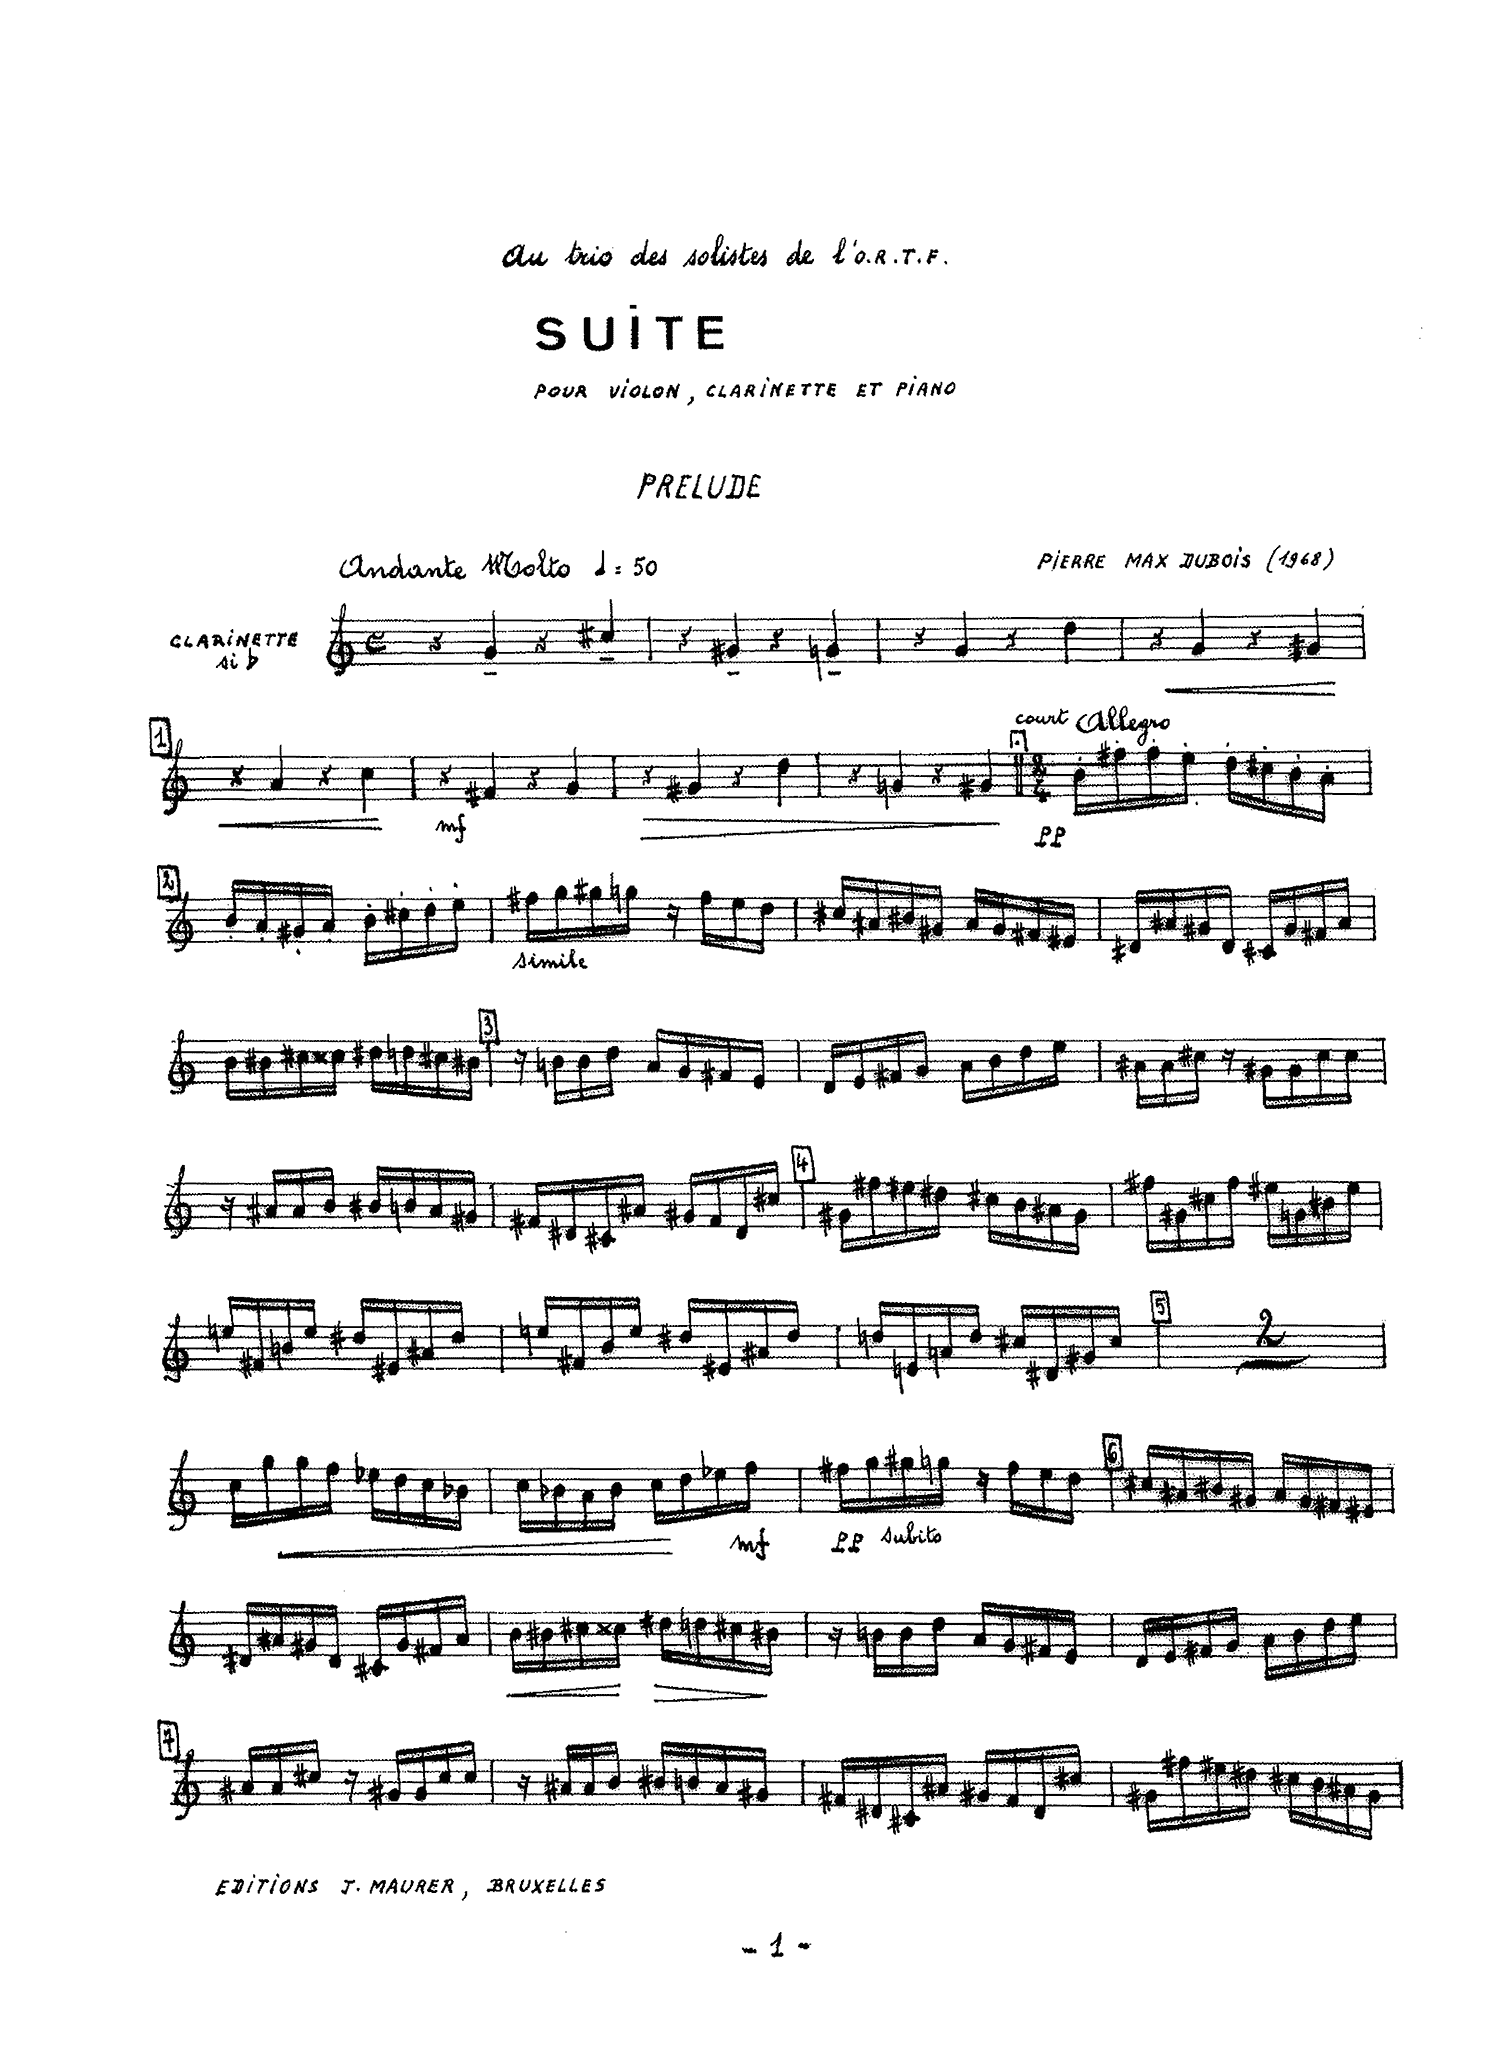 Pierre Max Dubois Suite clarinet part